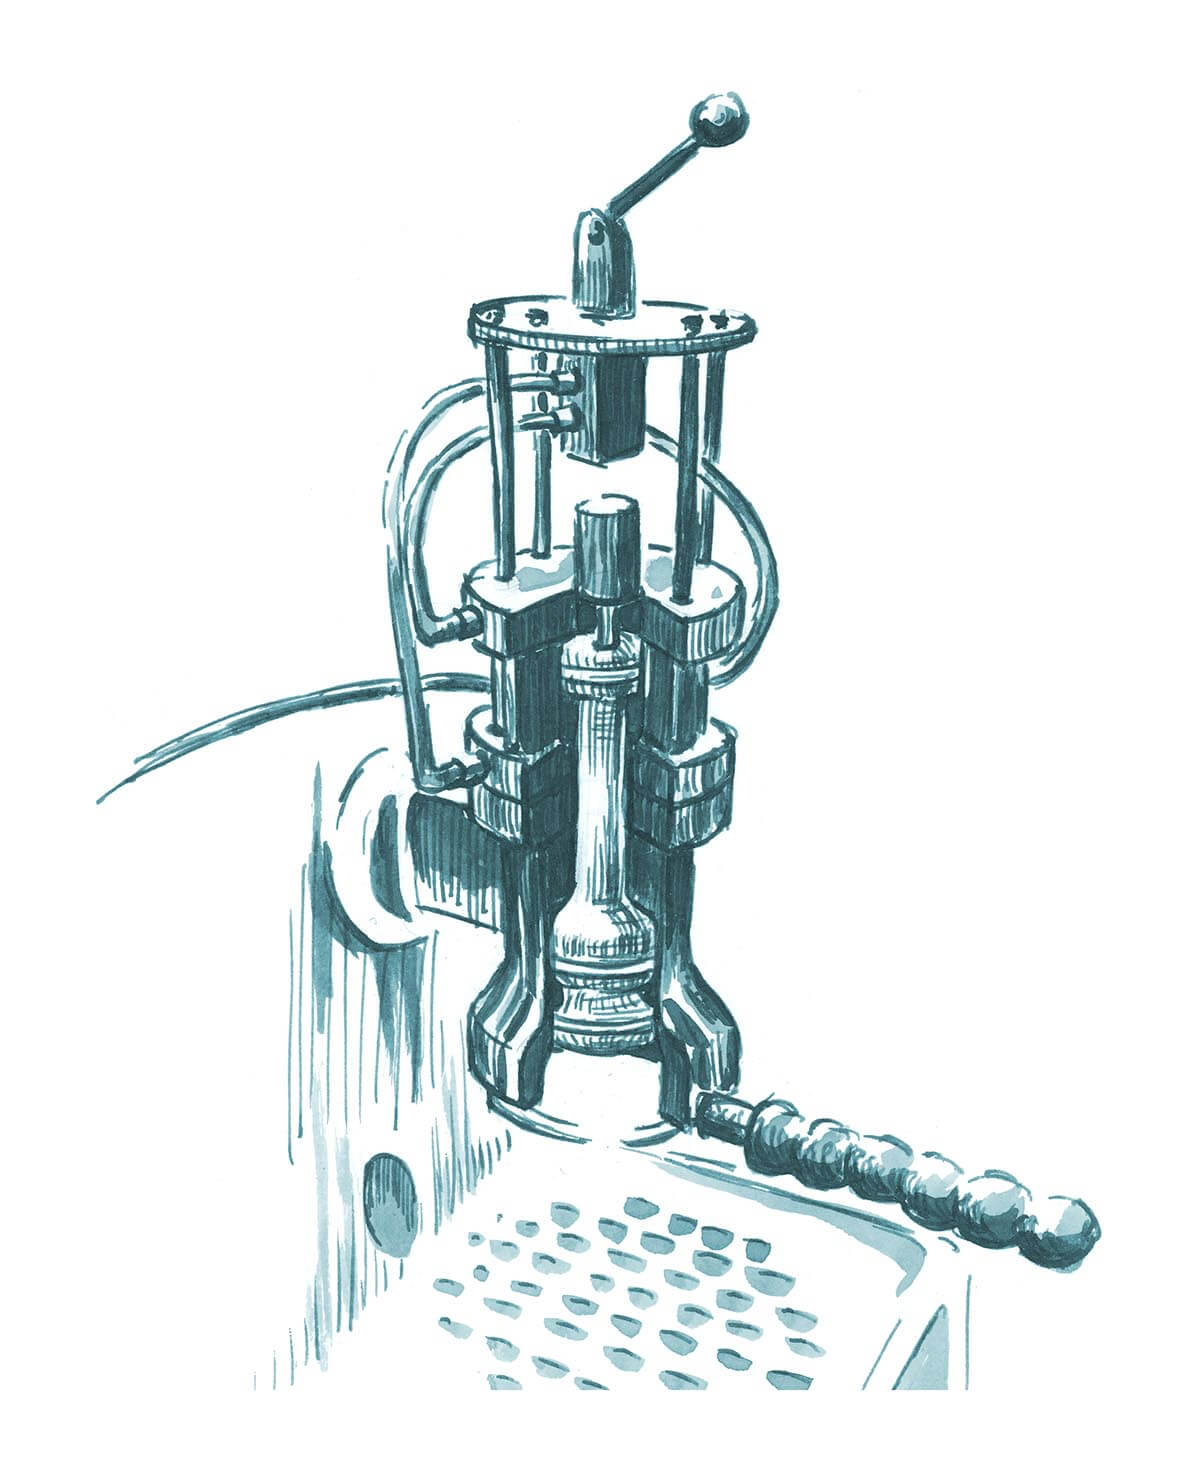 Pneumatic “lever” machine - drawing by Michael van Loozen